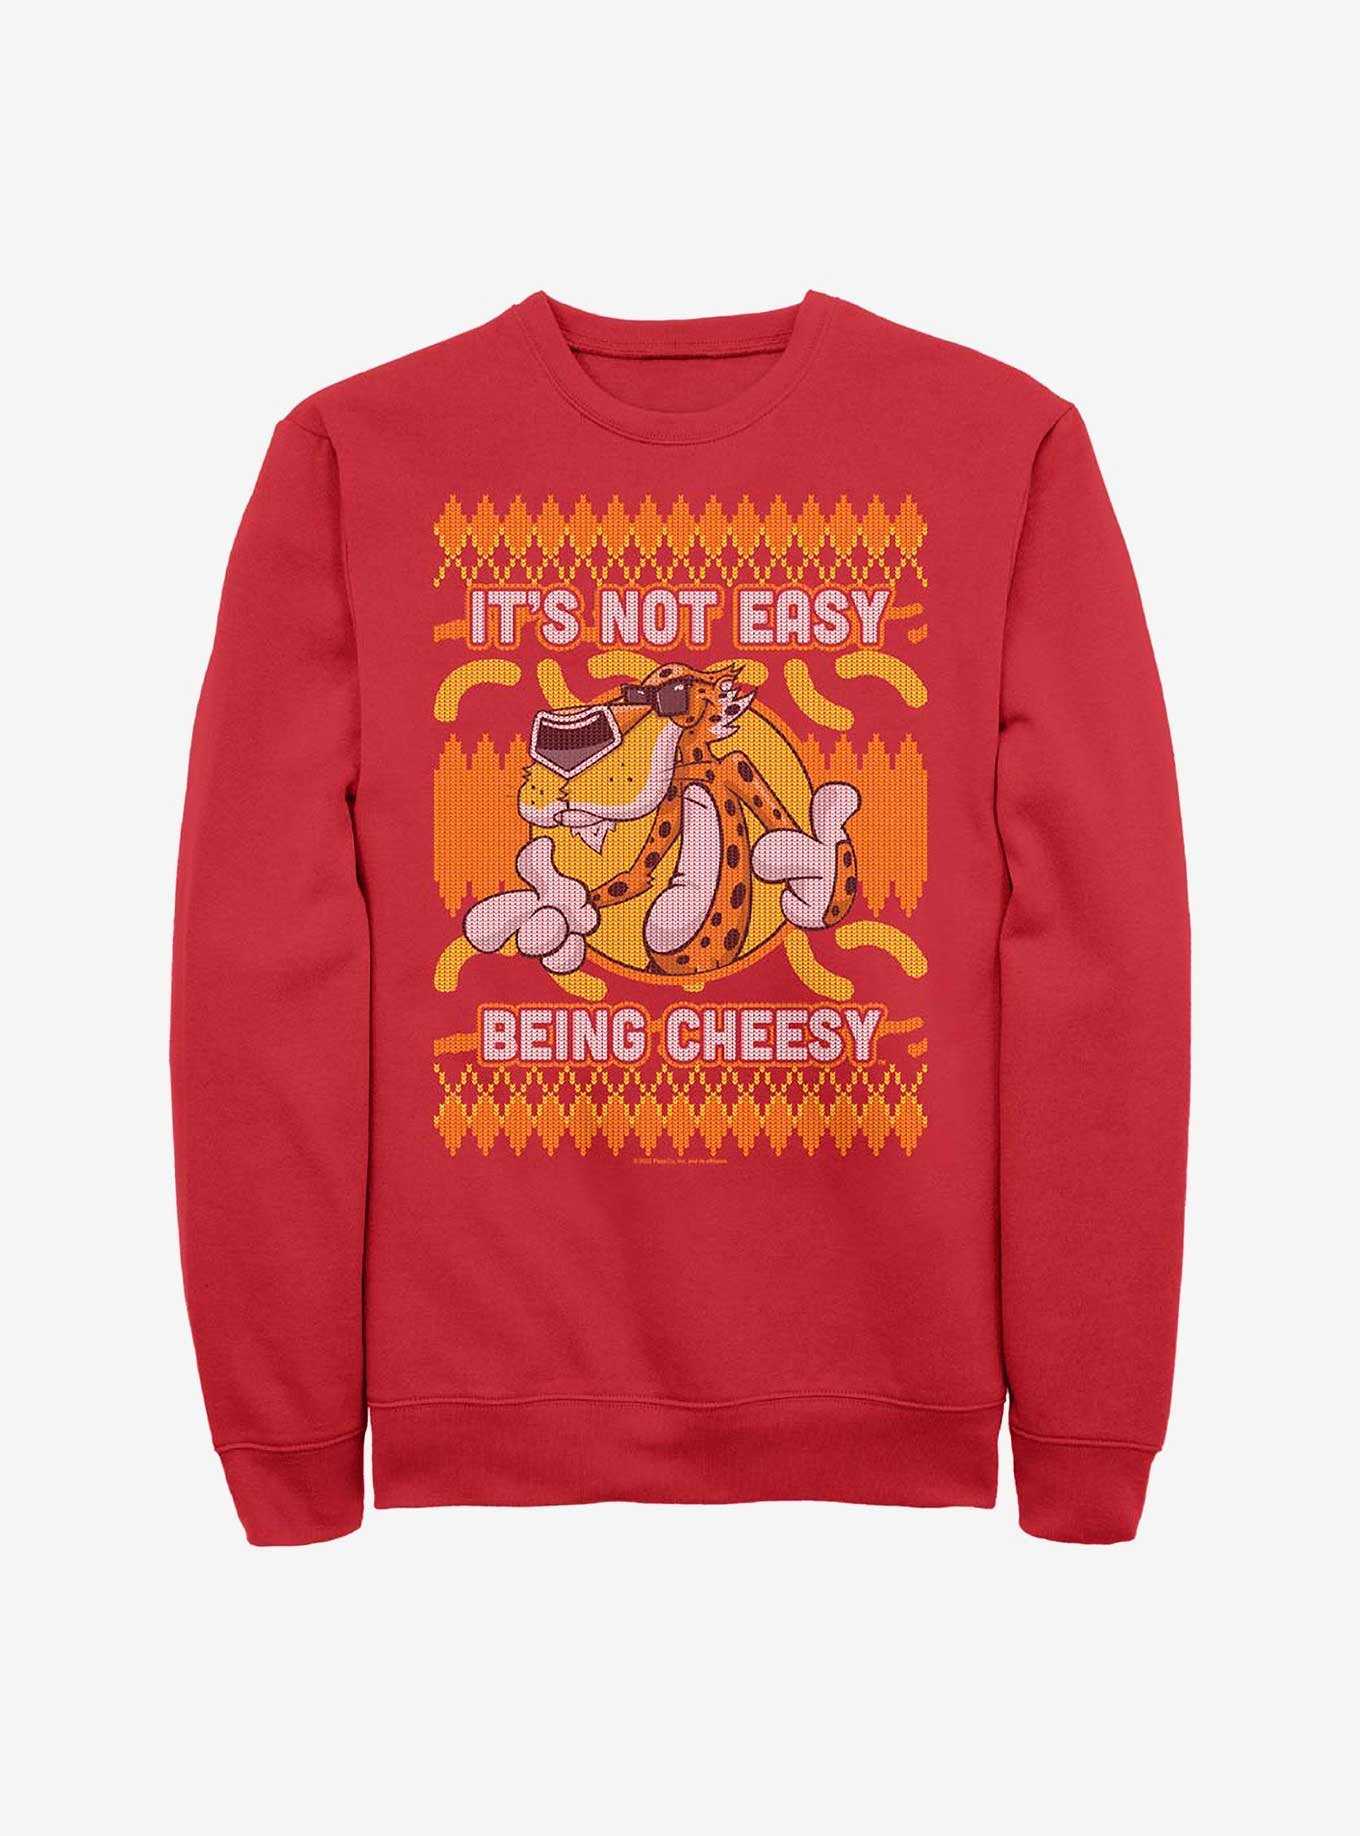 Cheetos Chester Cheetah Ugly Christmas Sweater Pattern Sweatshirt, , hi-res